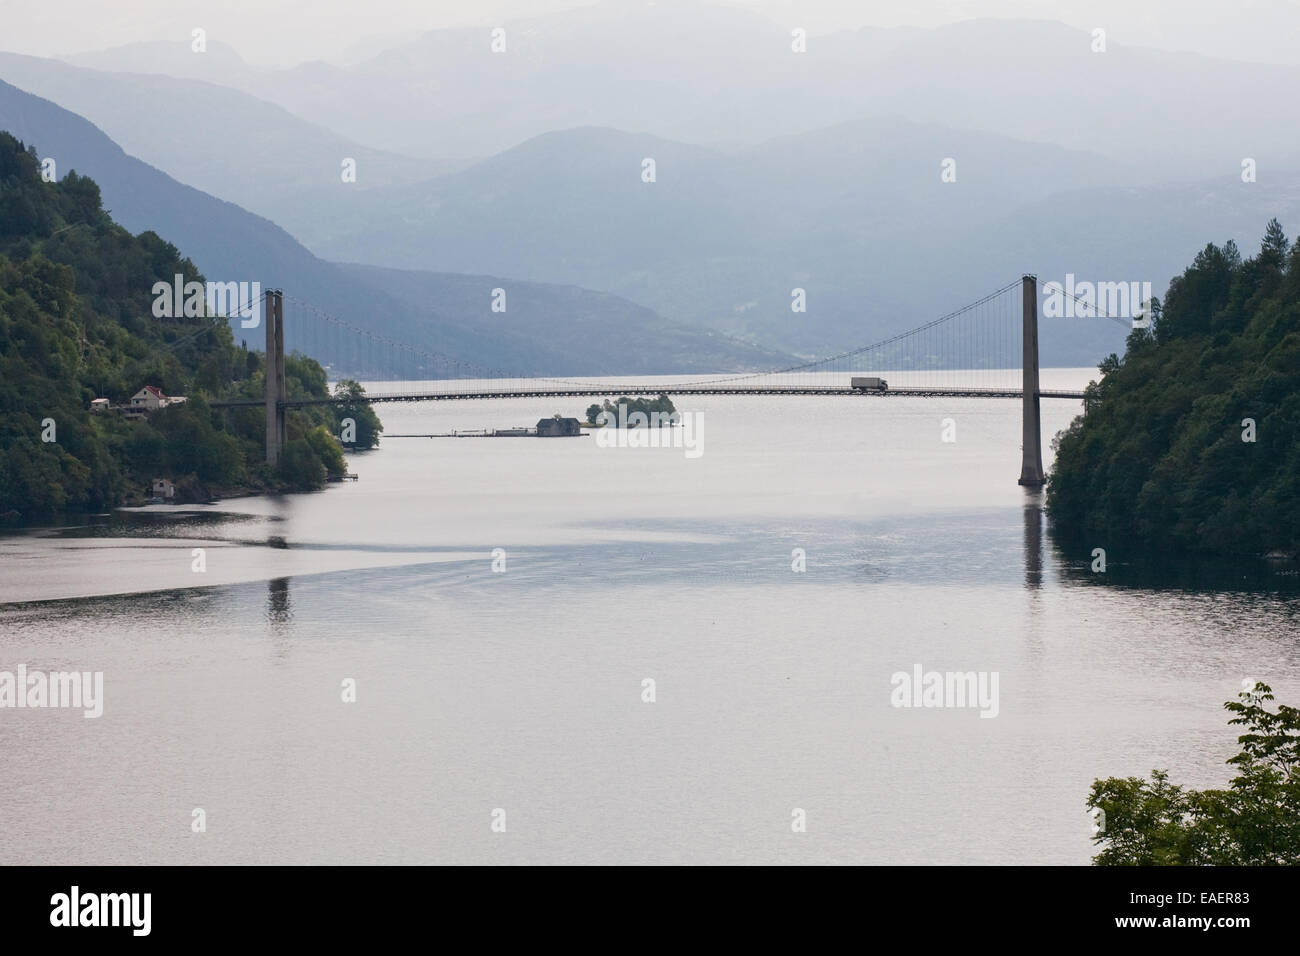 cable stayed bridge on beautiful Norwegian landscape background Stock Photo